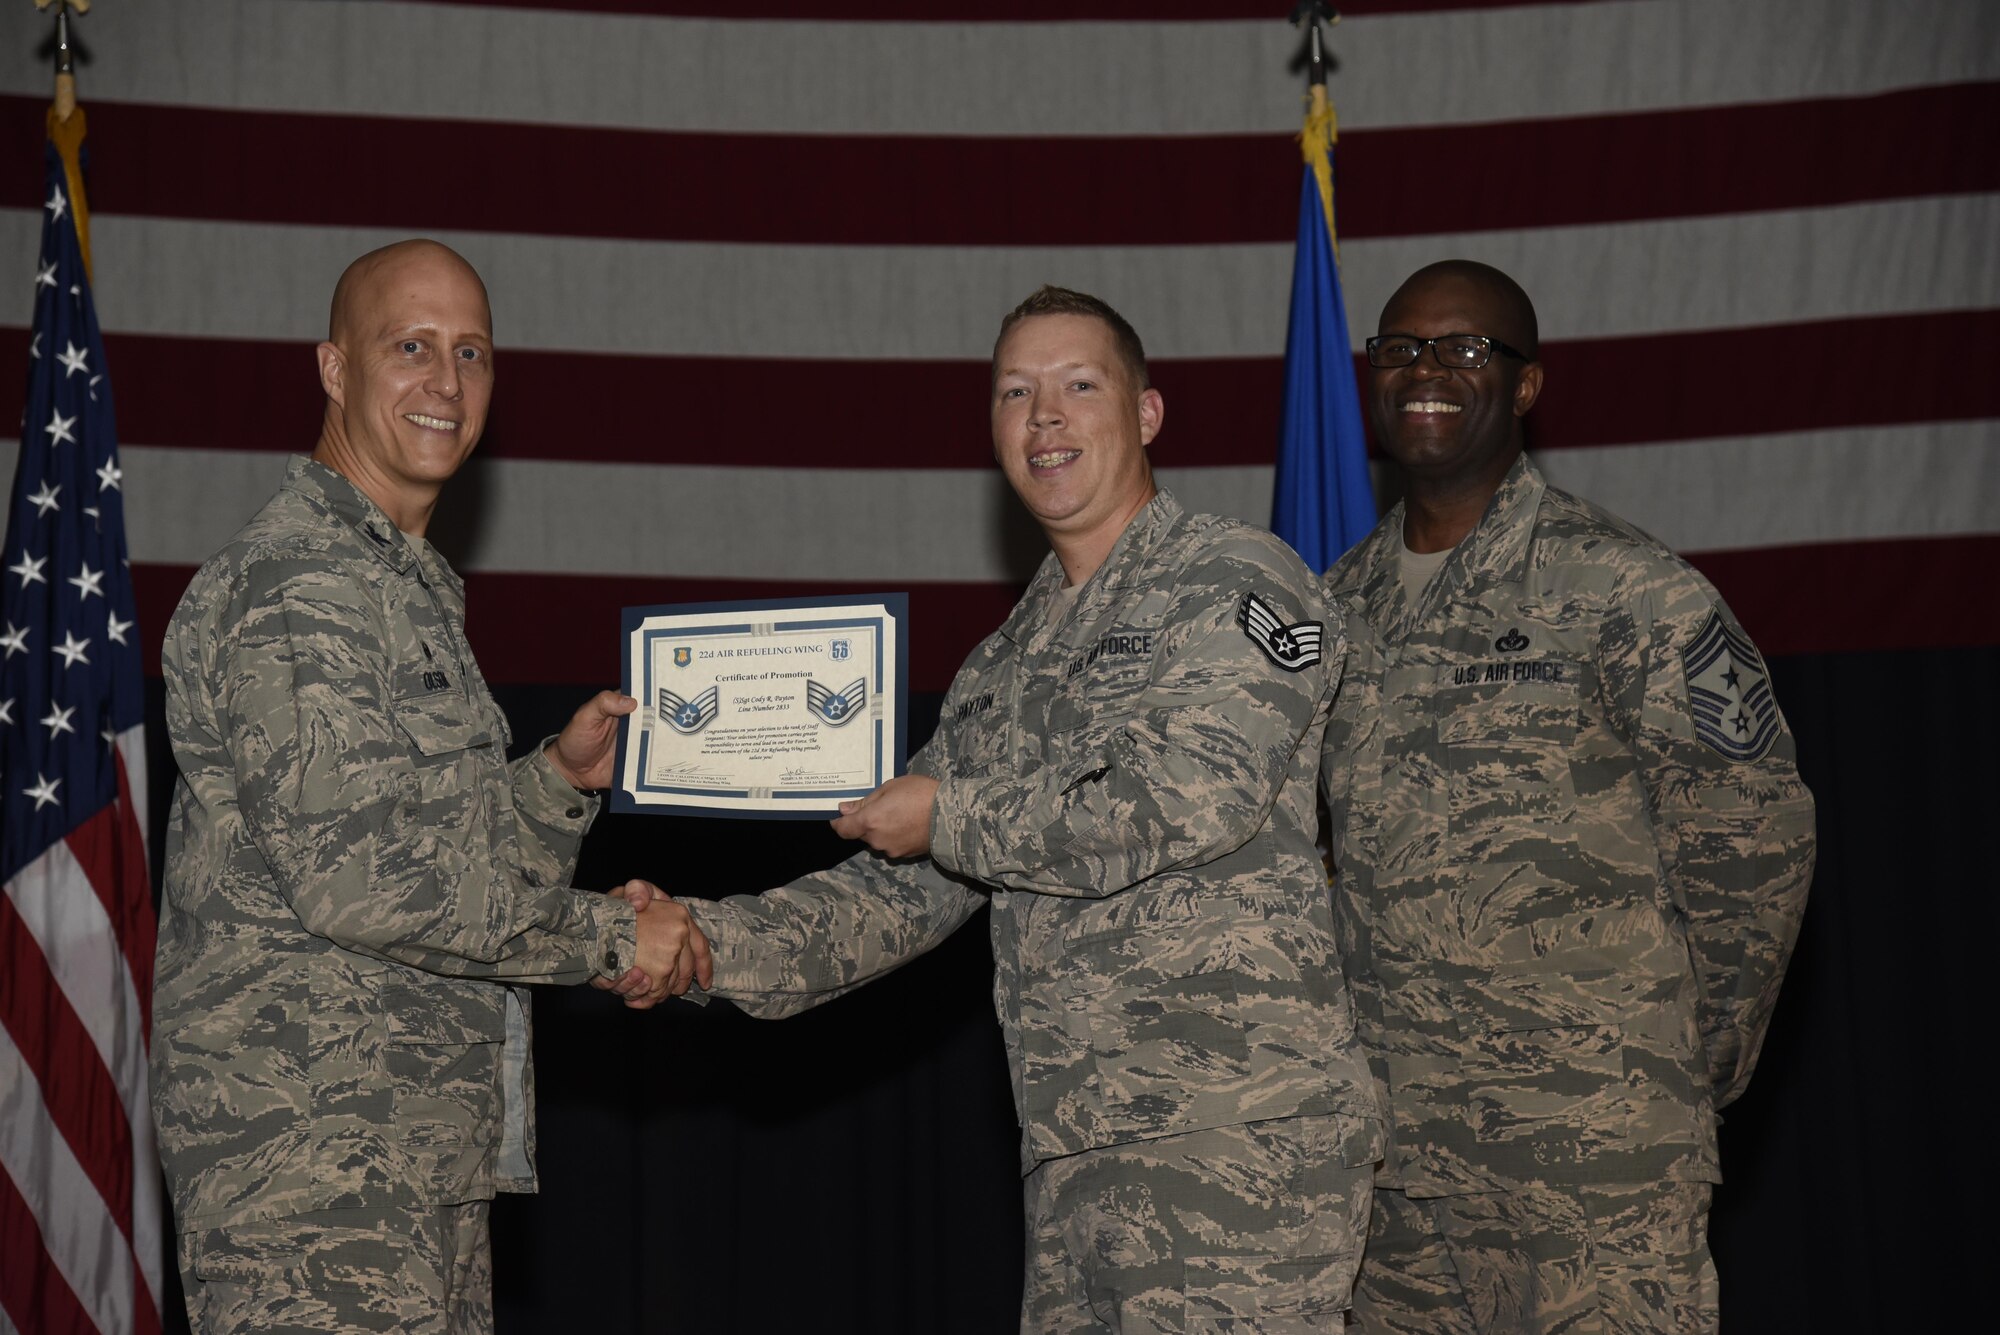 Airman receives certificate